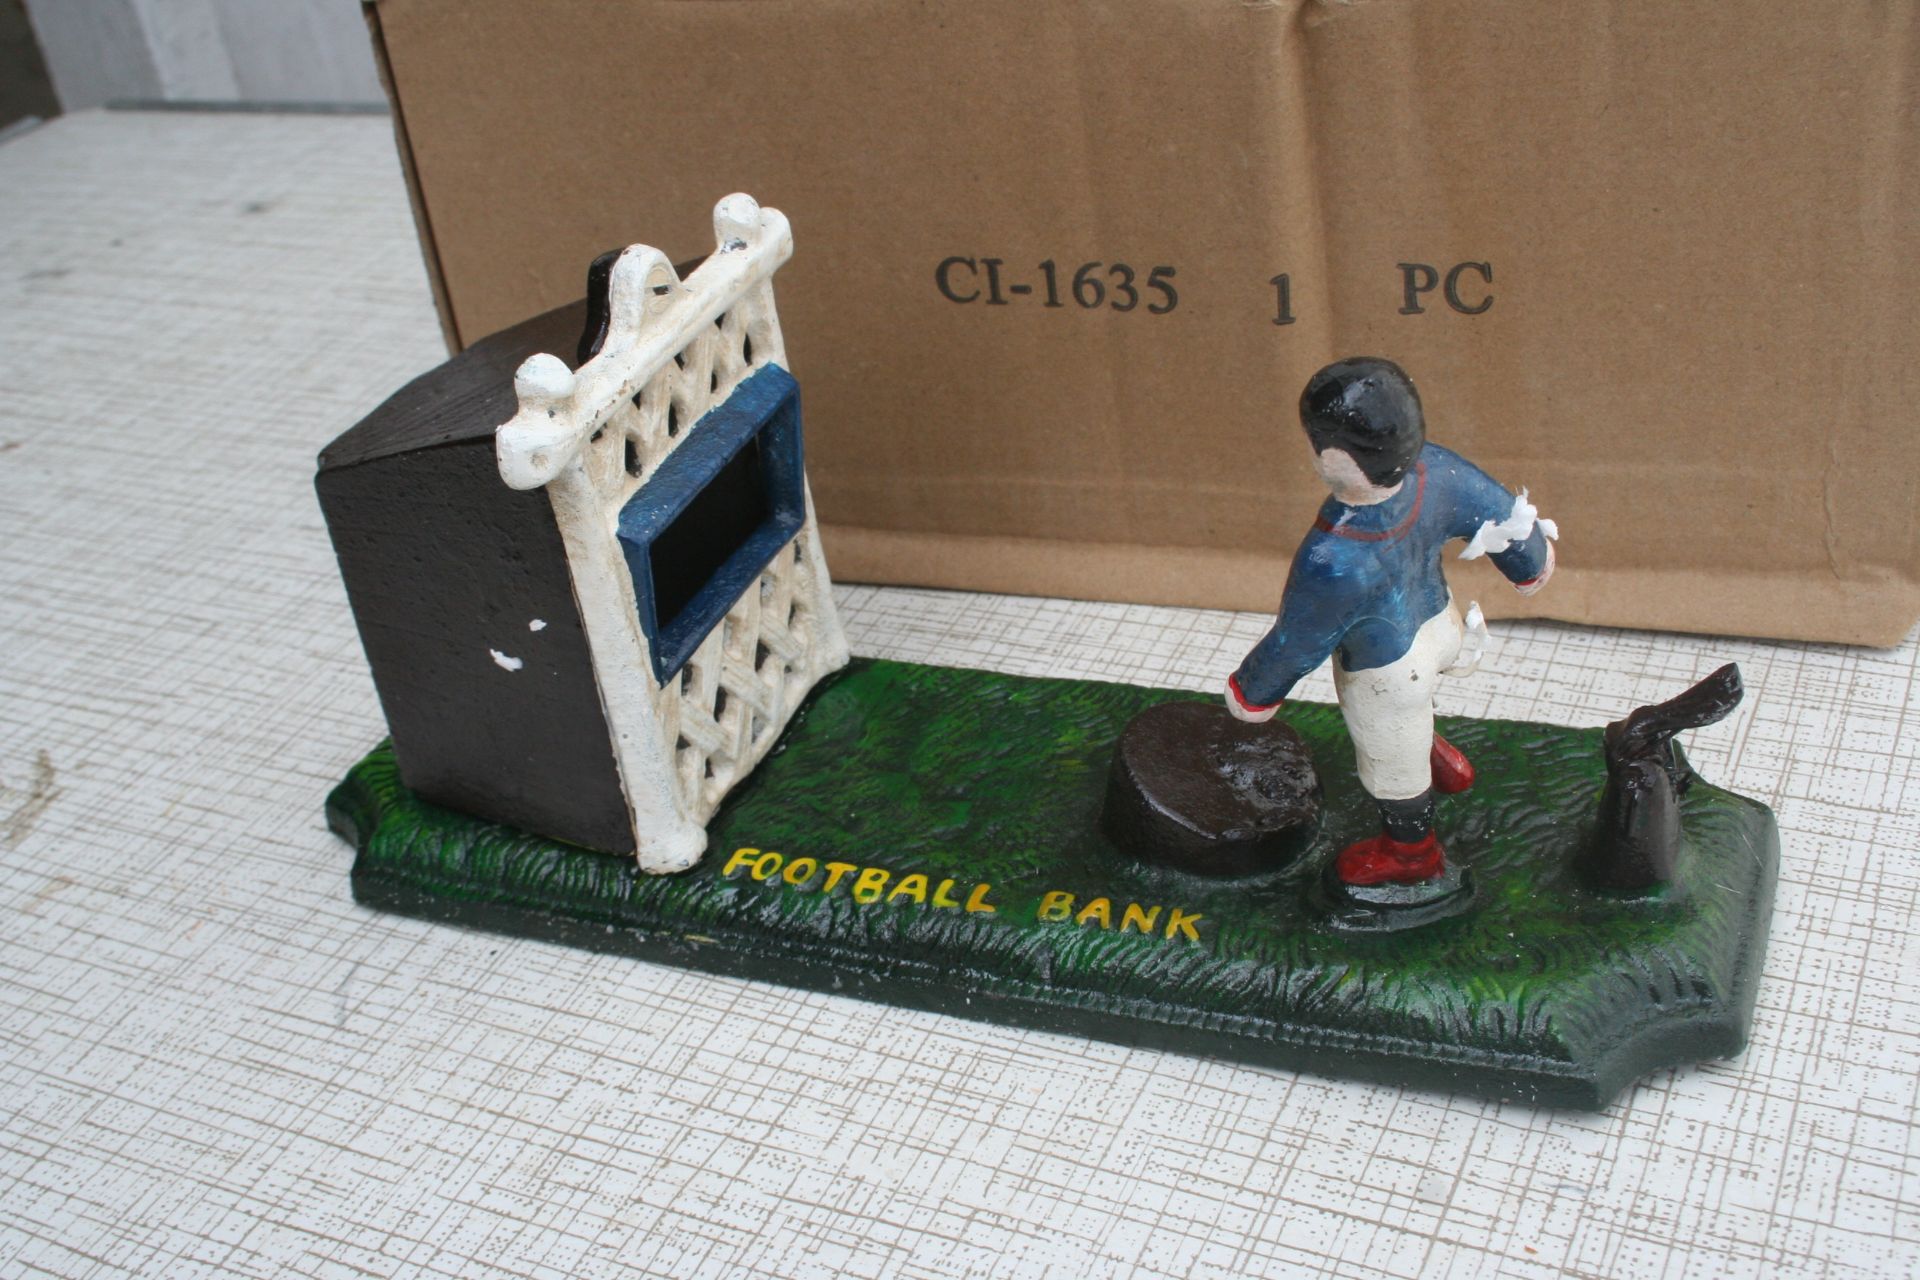 Football bank